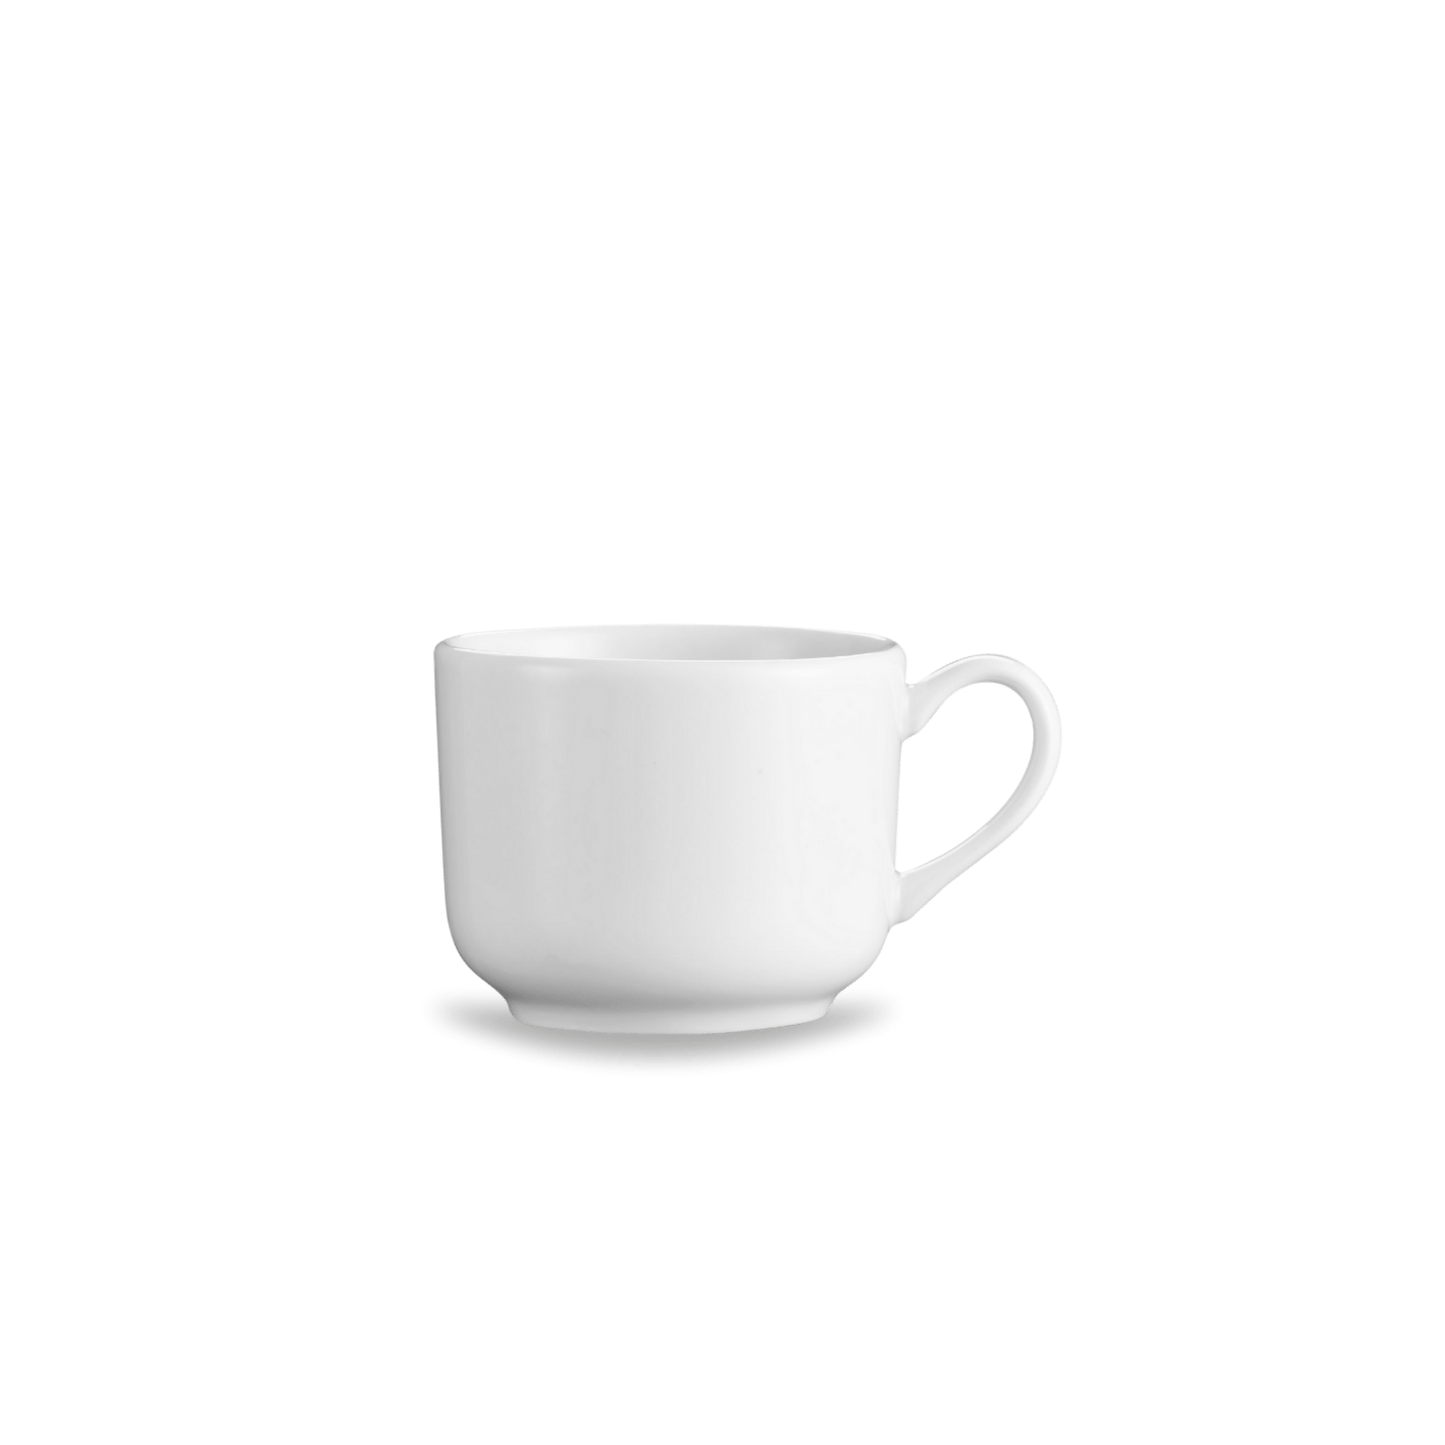 Pillivuyt Shop Cup Tea - 3" diam x 2.5" H - 5 oz - Set of 4 Sancerre Cups, Sets of 4